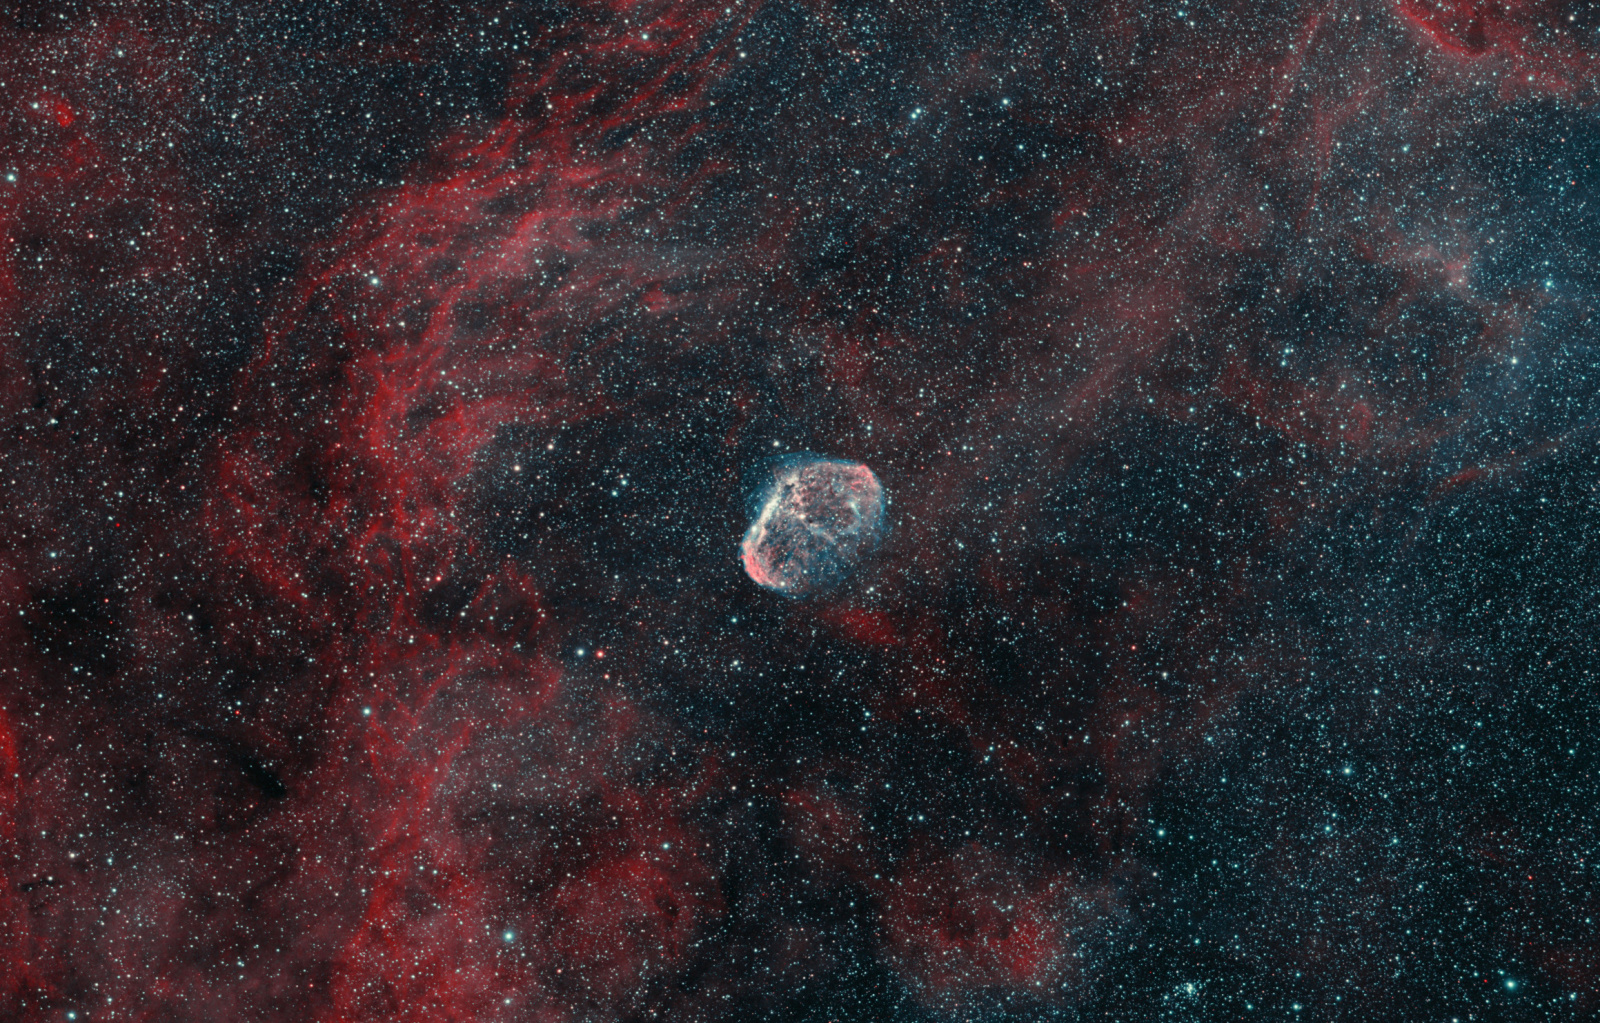 NGC_6888_Ha_37x300s_OIII_42x300s_Skala_1-4.thumb.jpg.b6ffbf345f9de0043de6b55acc584c5a.jpg